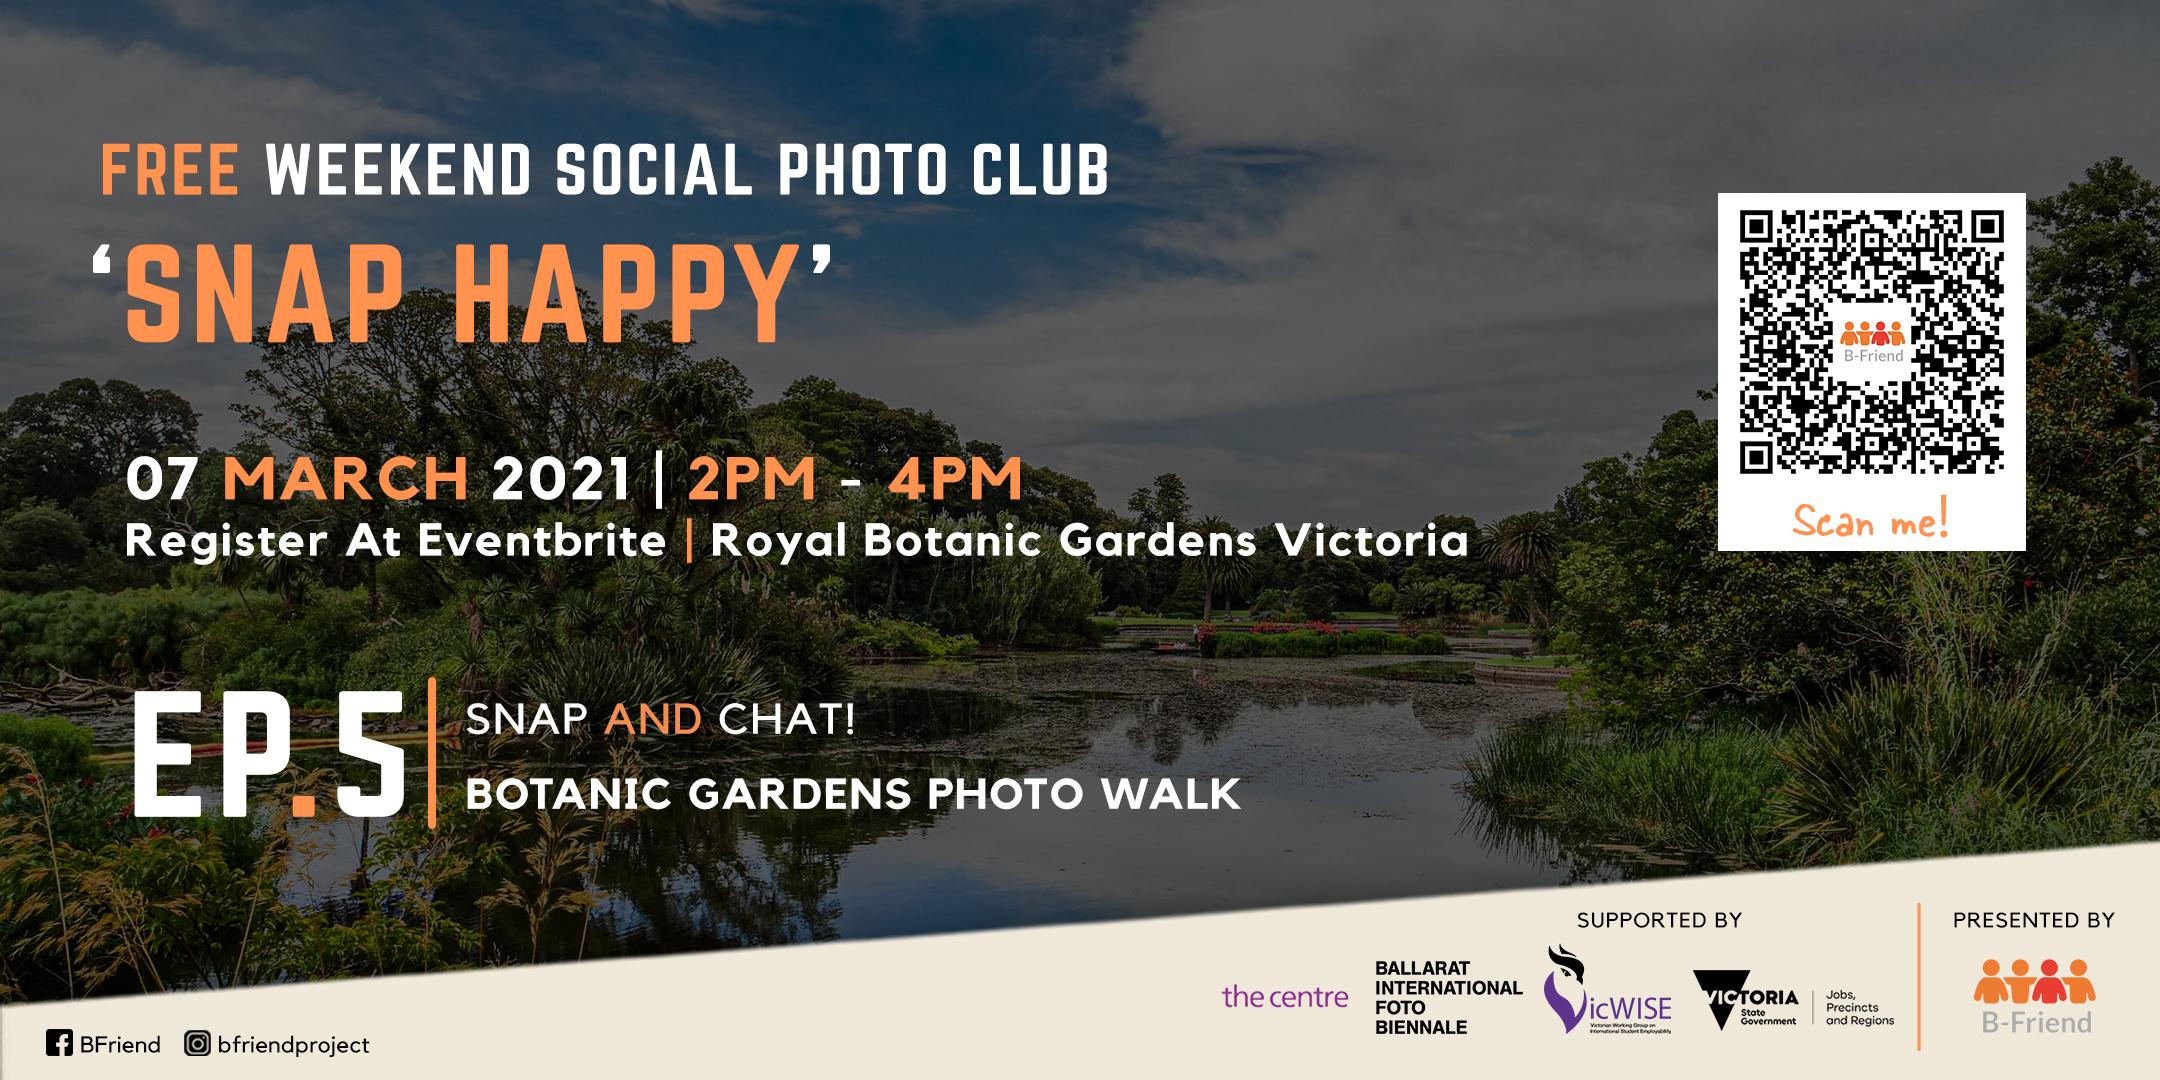 Botanic Gardens Photo Walk - Snap Happy Social Photo Club for Students